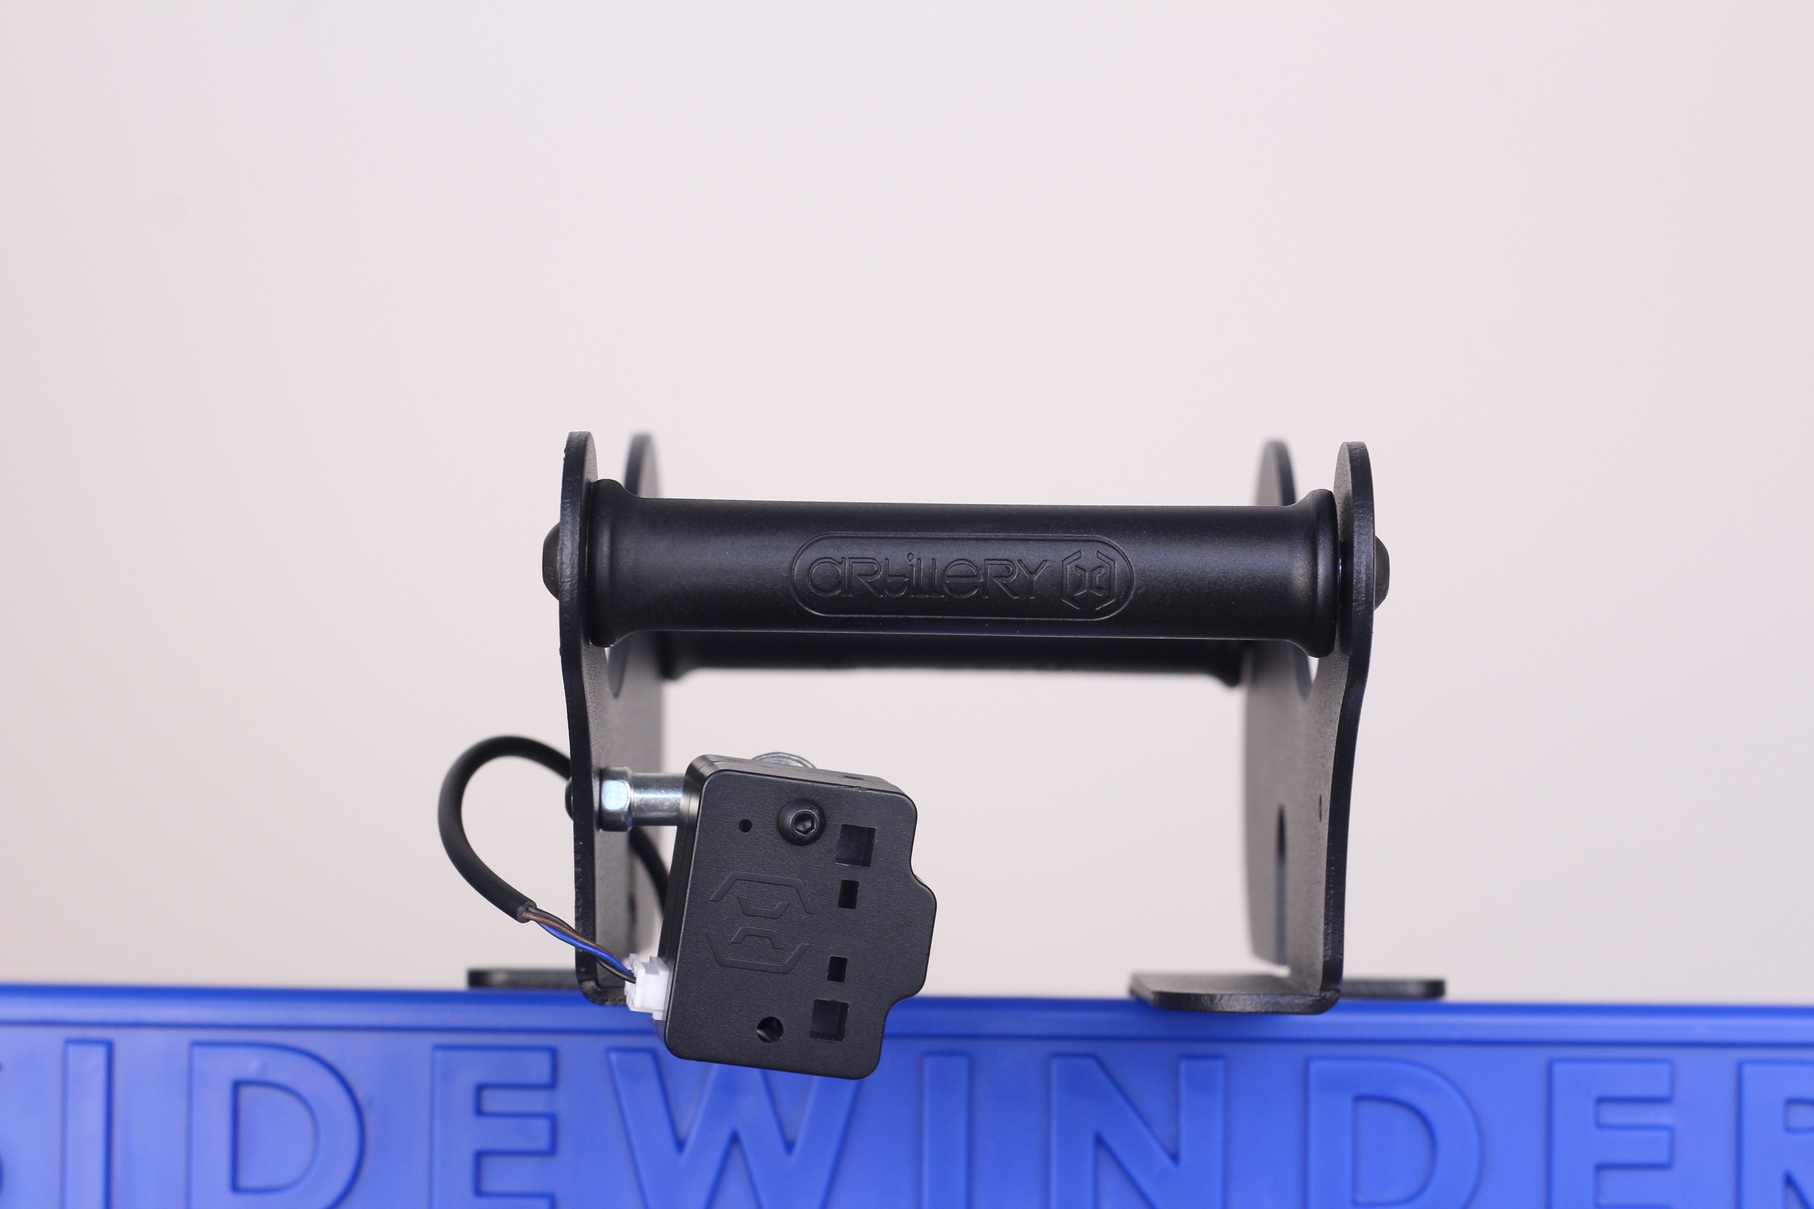 Sidewinder X2 spool holder | Artillery Sidewinder X2 Review: A Refined Sidewinder X1?